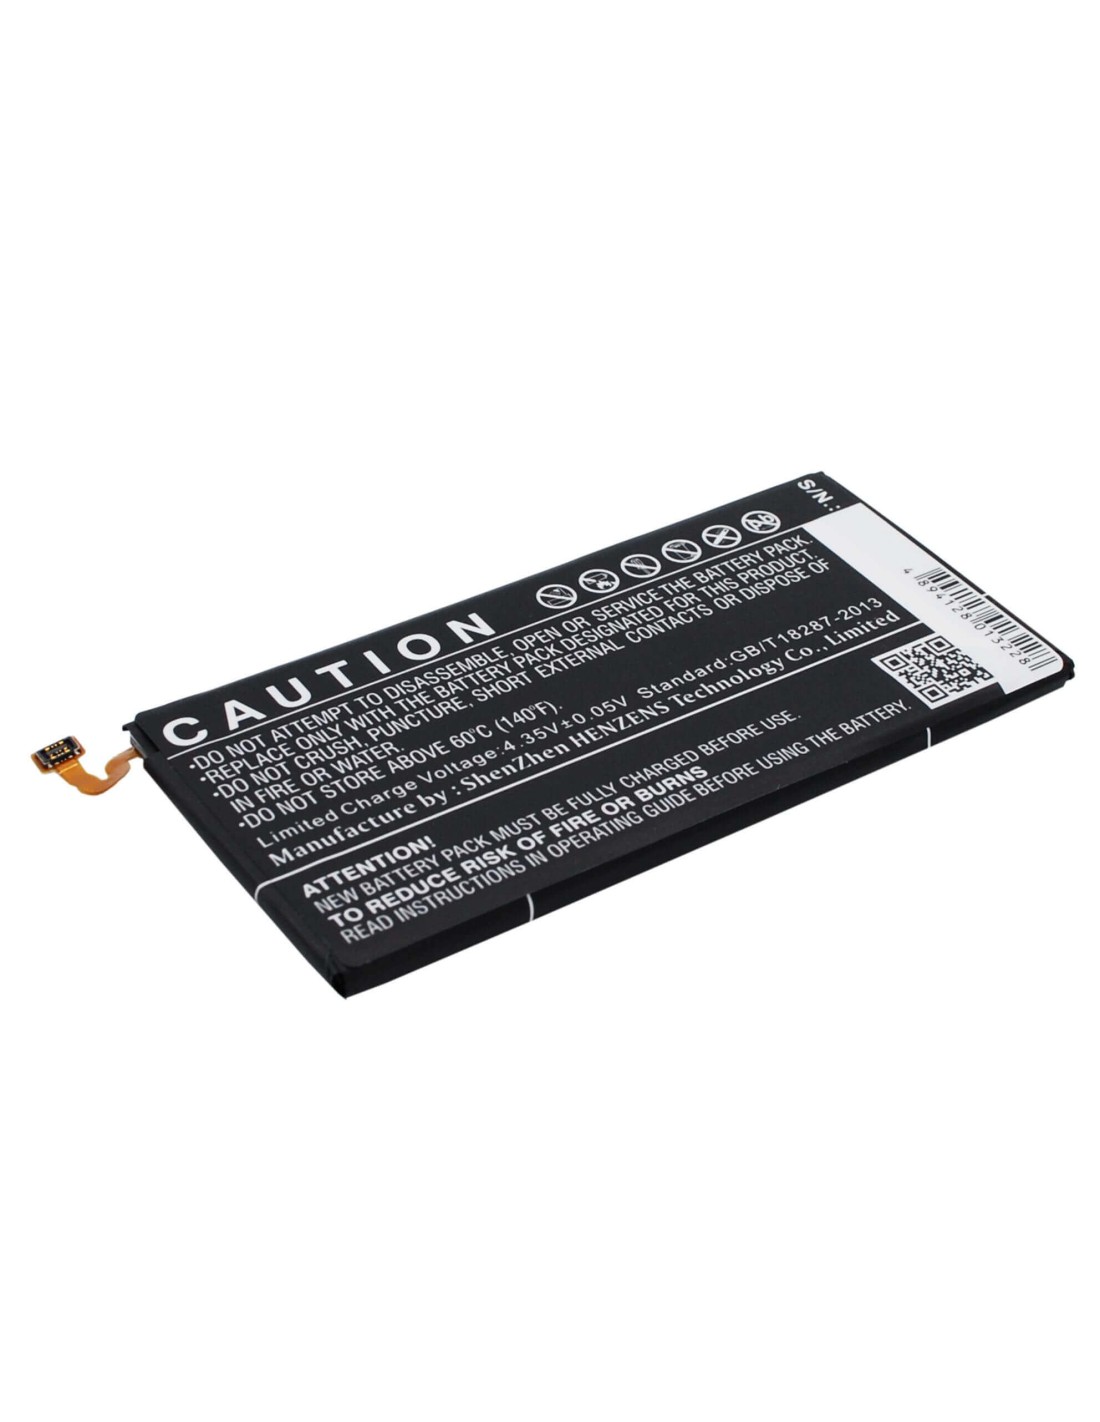 Battery for Samsung Galaxy A7, SM-A700F, SM-A700FD 3.8V, 2600mAh - 9.88Wh